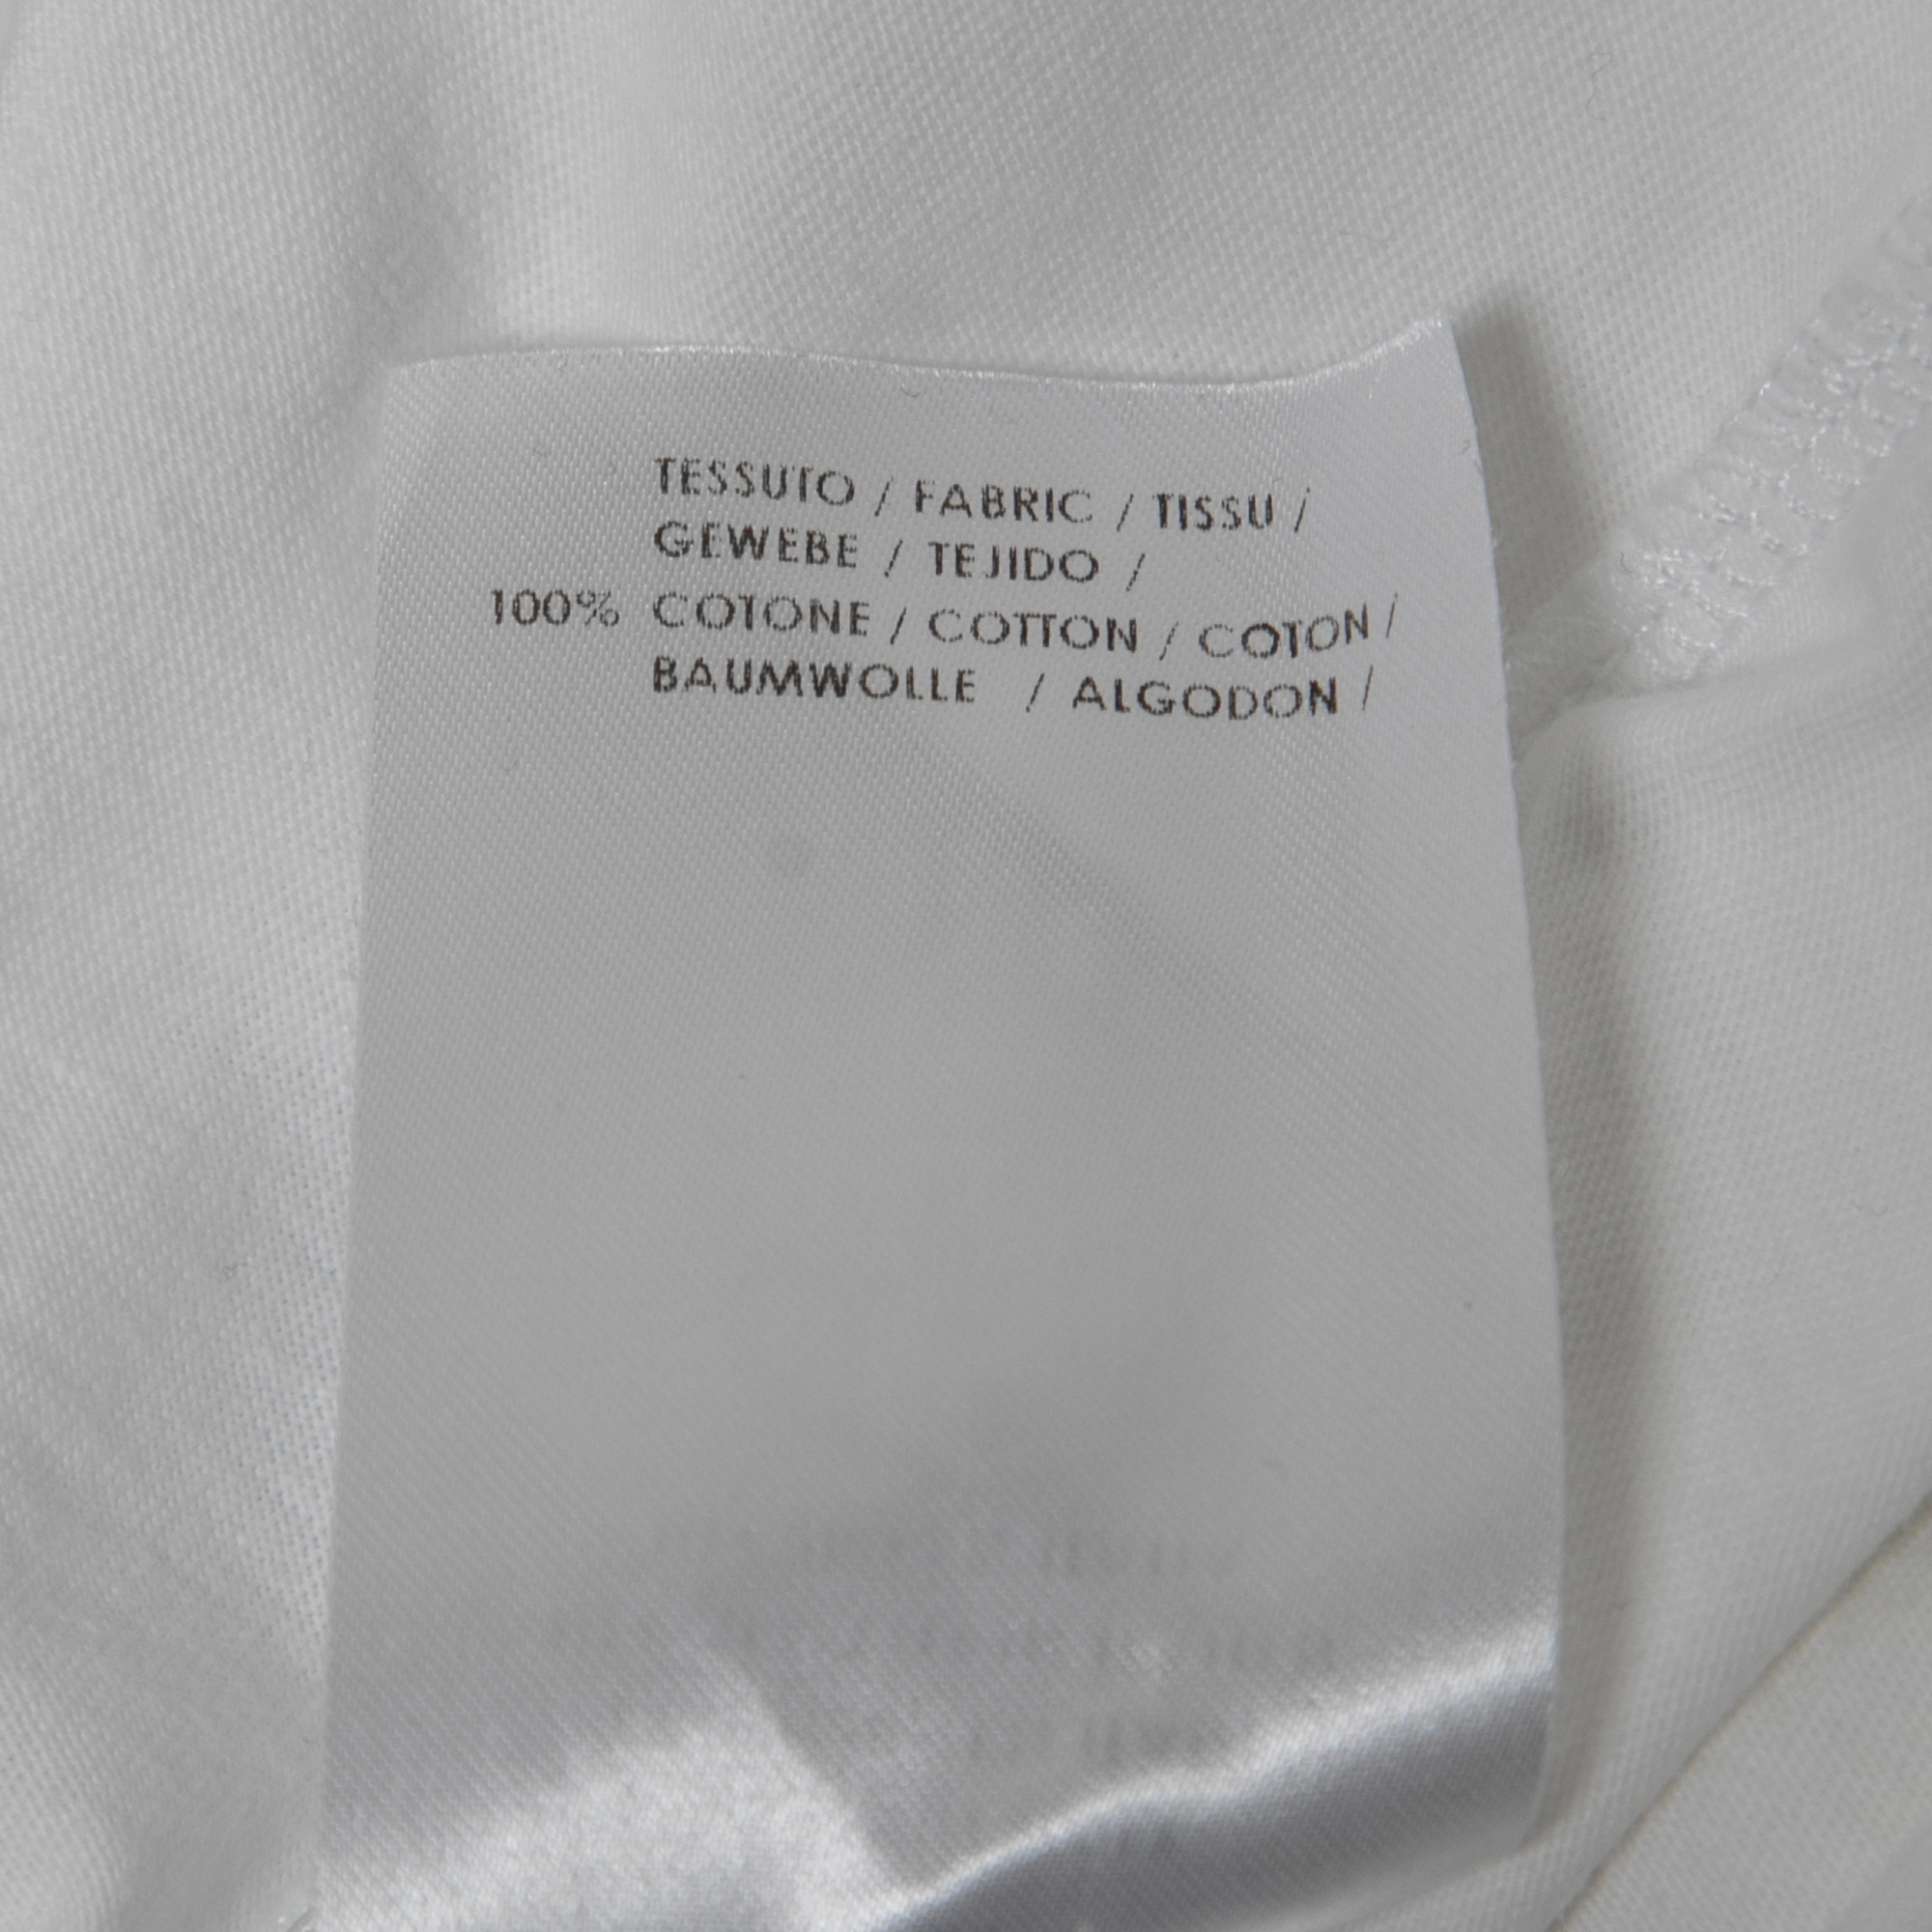 Alexander McQueen White Snake Print Cotton V-Neck T-Shirt XS